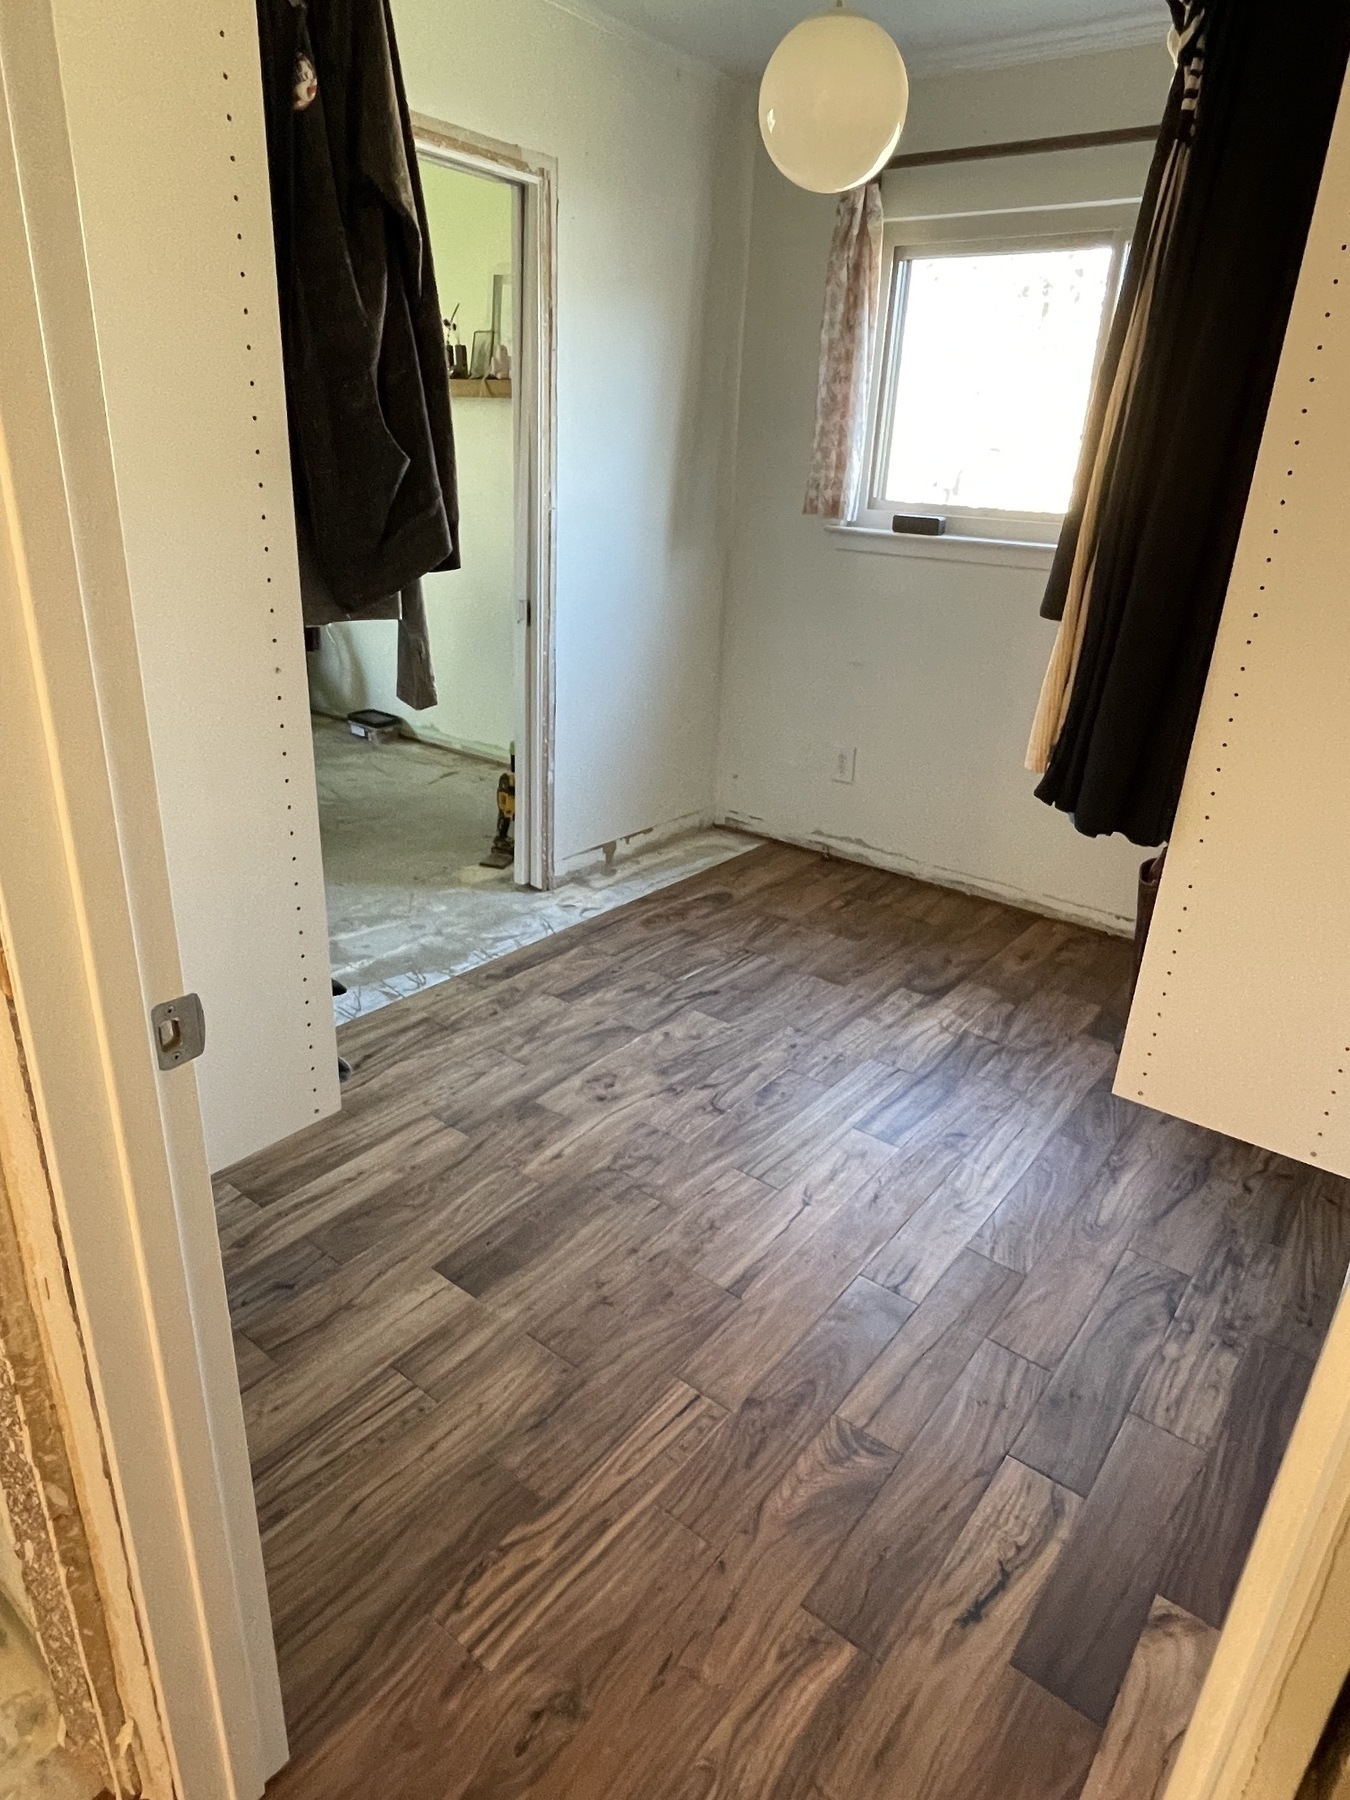 Bedroom walk-in closet flooring installed